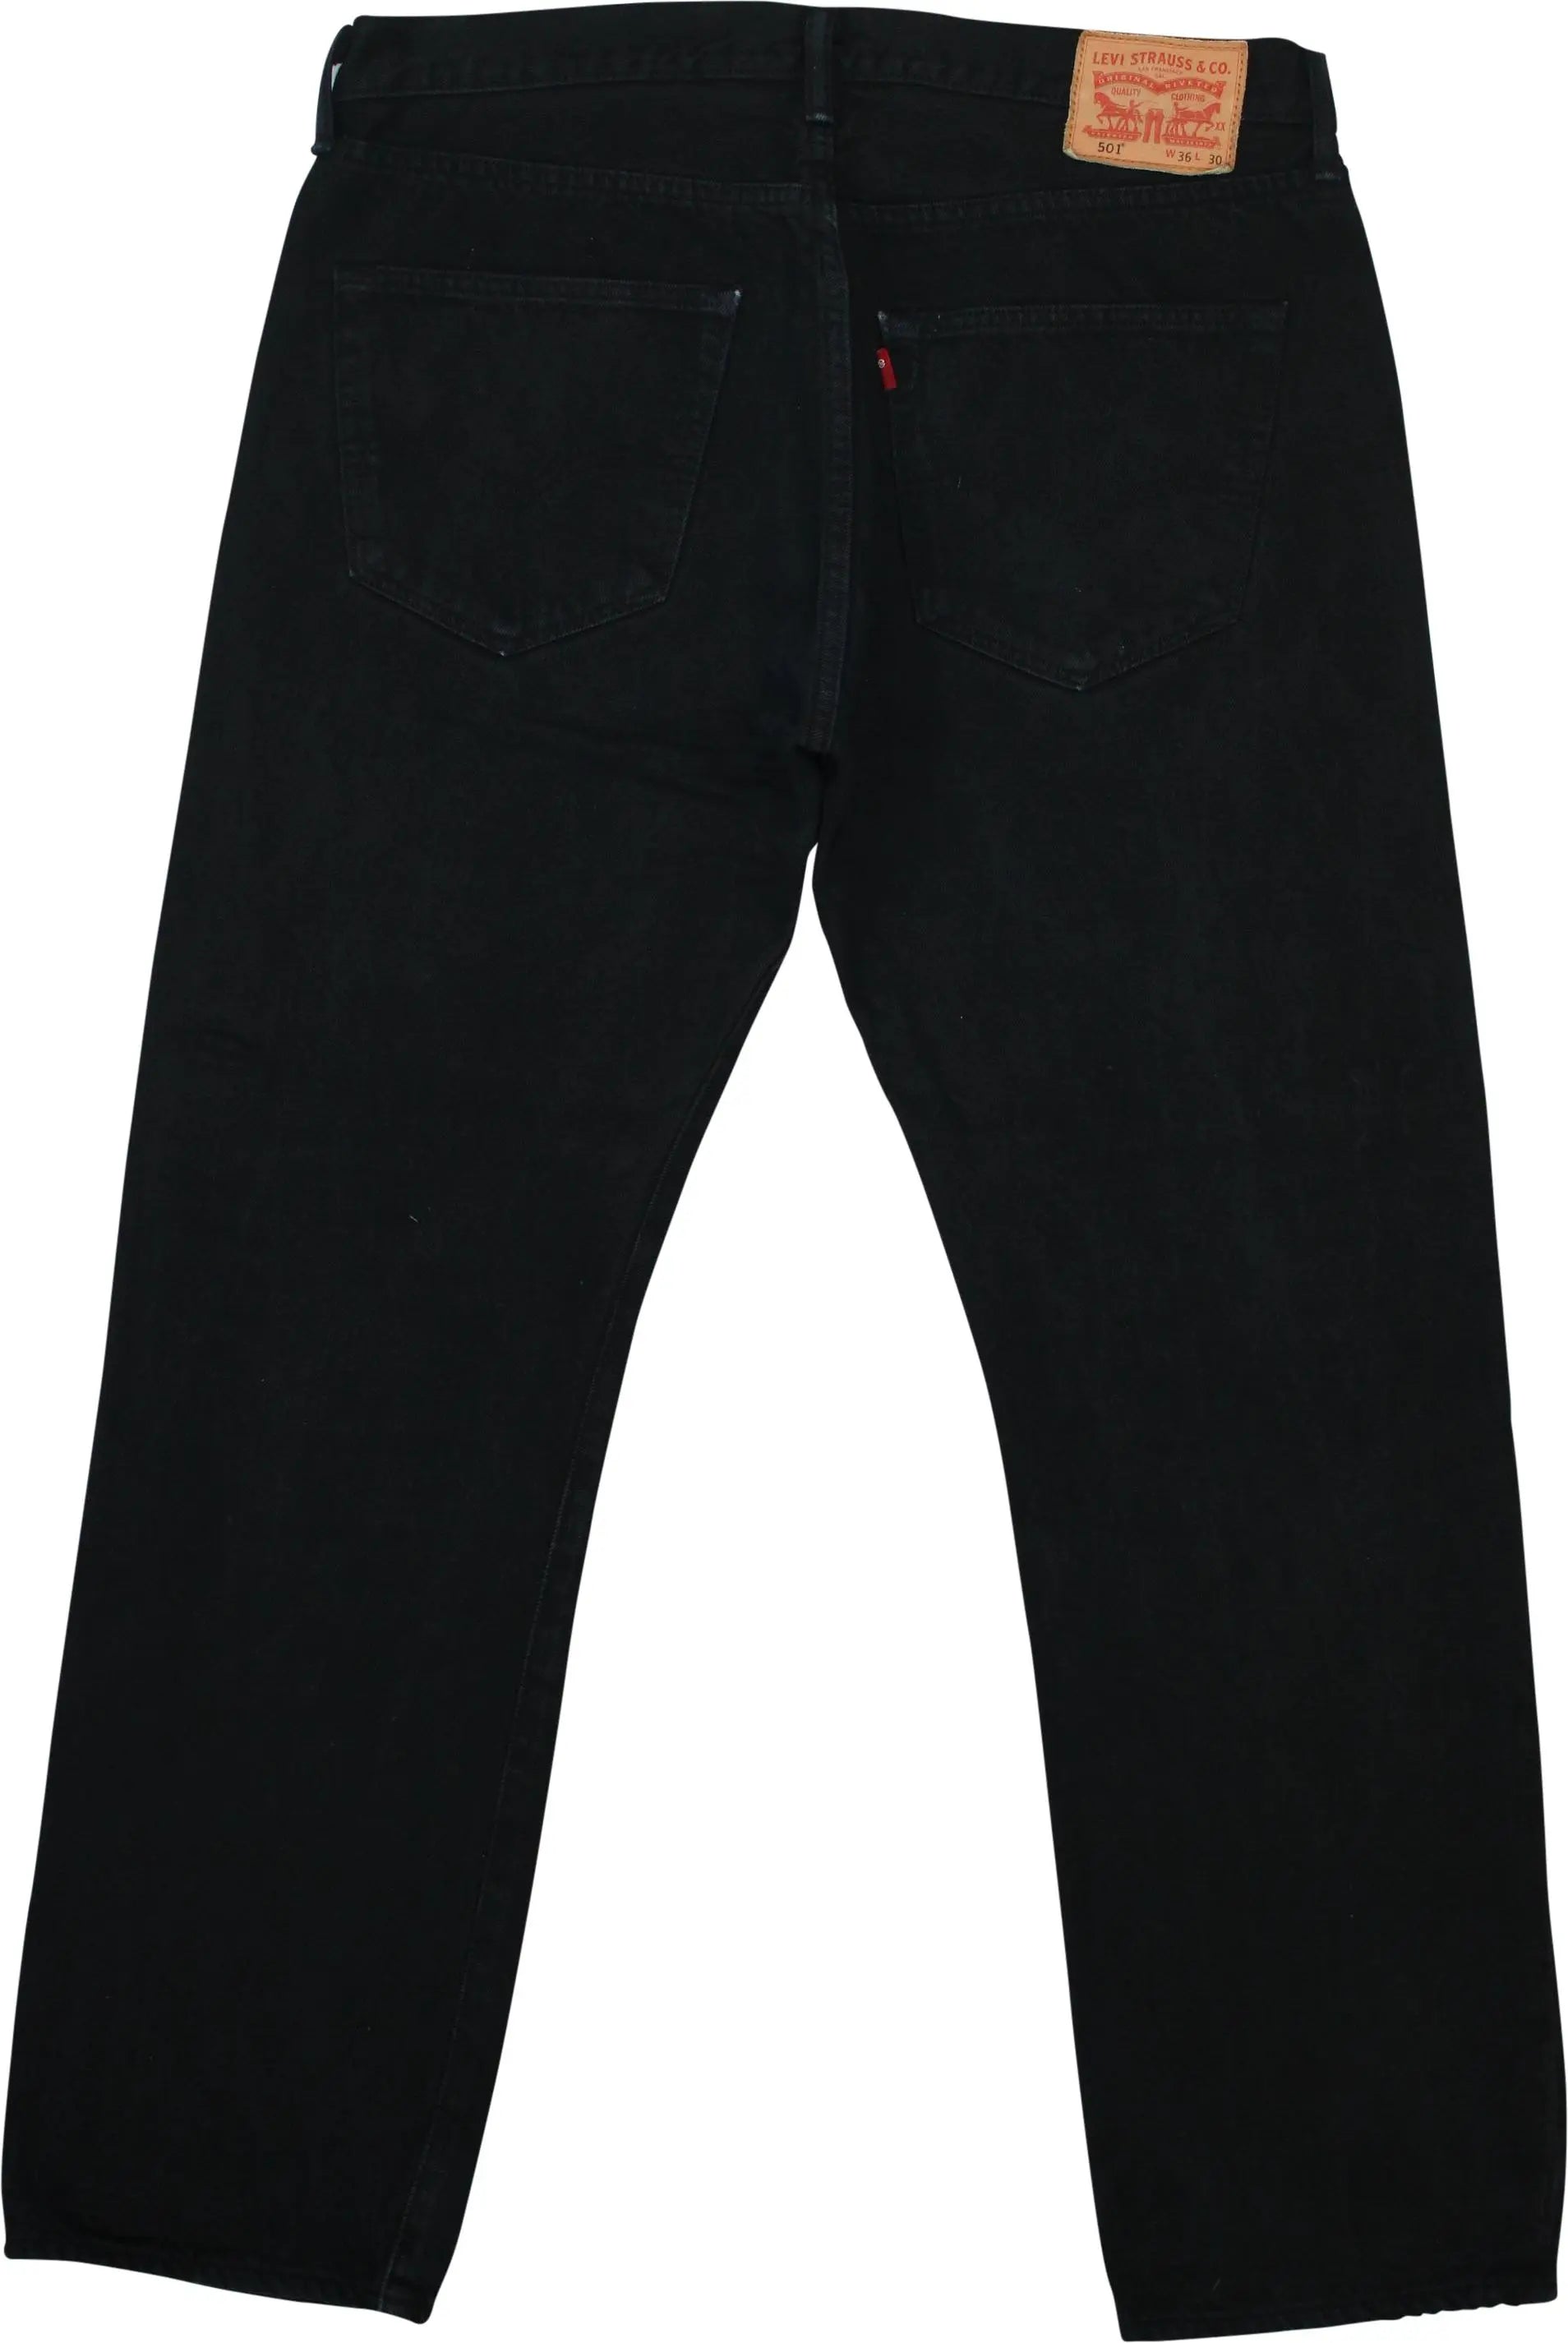 Levi's - Levi's 501 Black Regular Fit Jeans- ThriftTale.com - Vintage and second handclothing